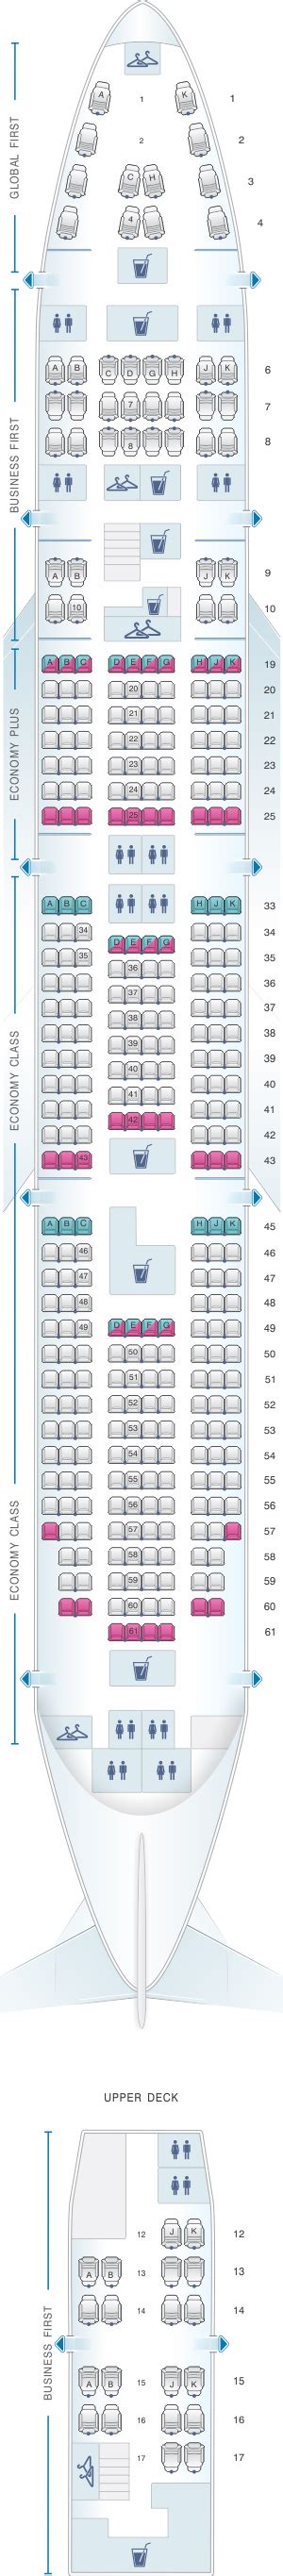 United Boeing Seat Map Updated Find The Best Seat Seatmaps Sexiz Pix